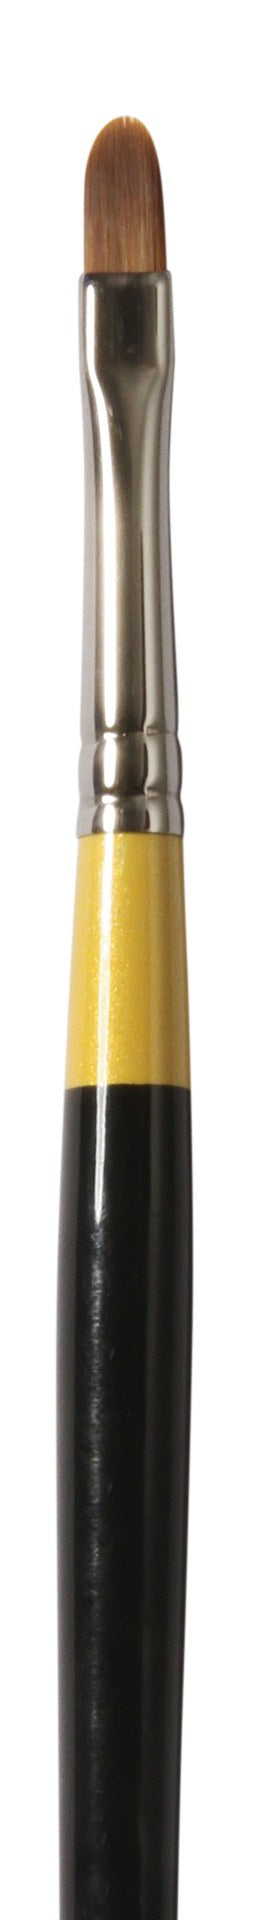 Daler Rowney System 3 S67 Filbert Synthetic Art Paint Brush